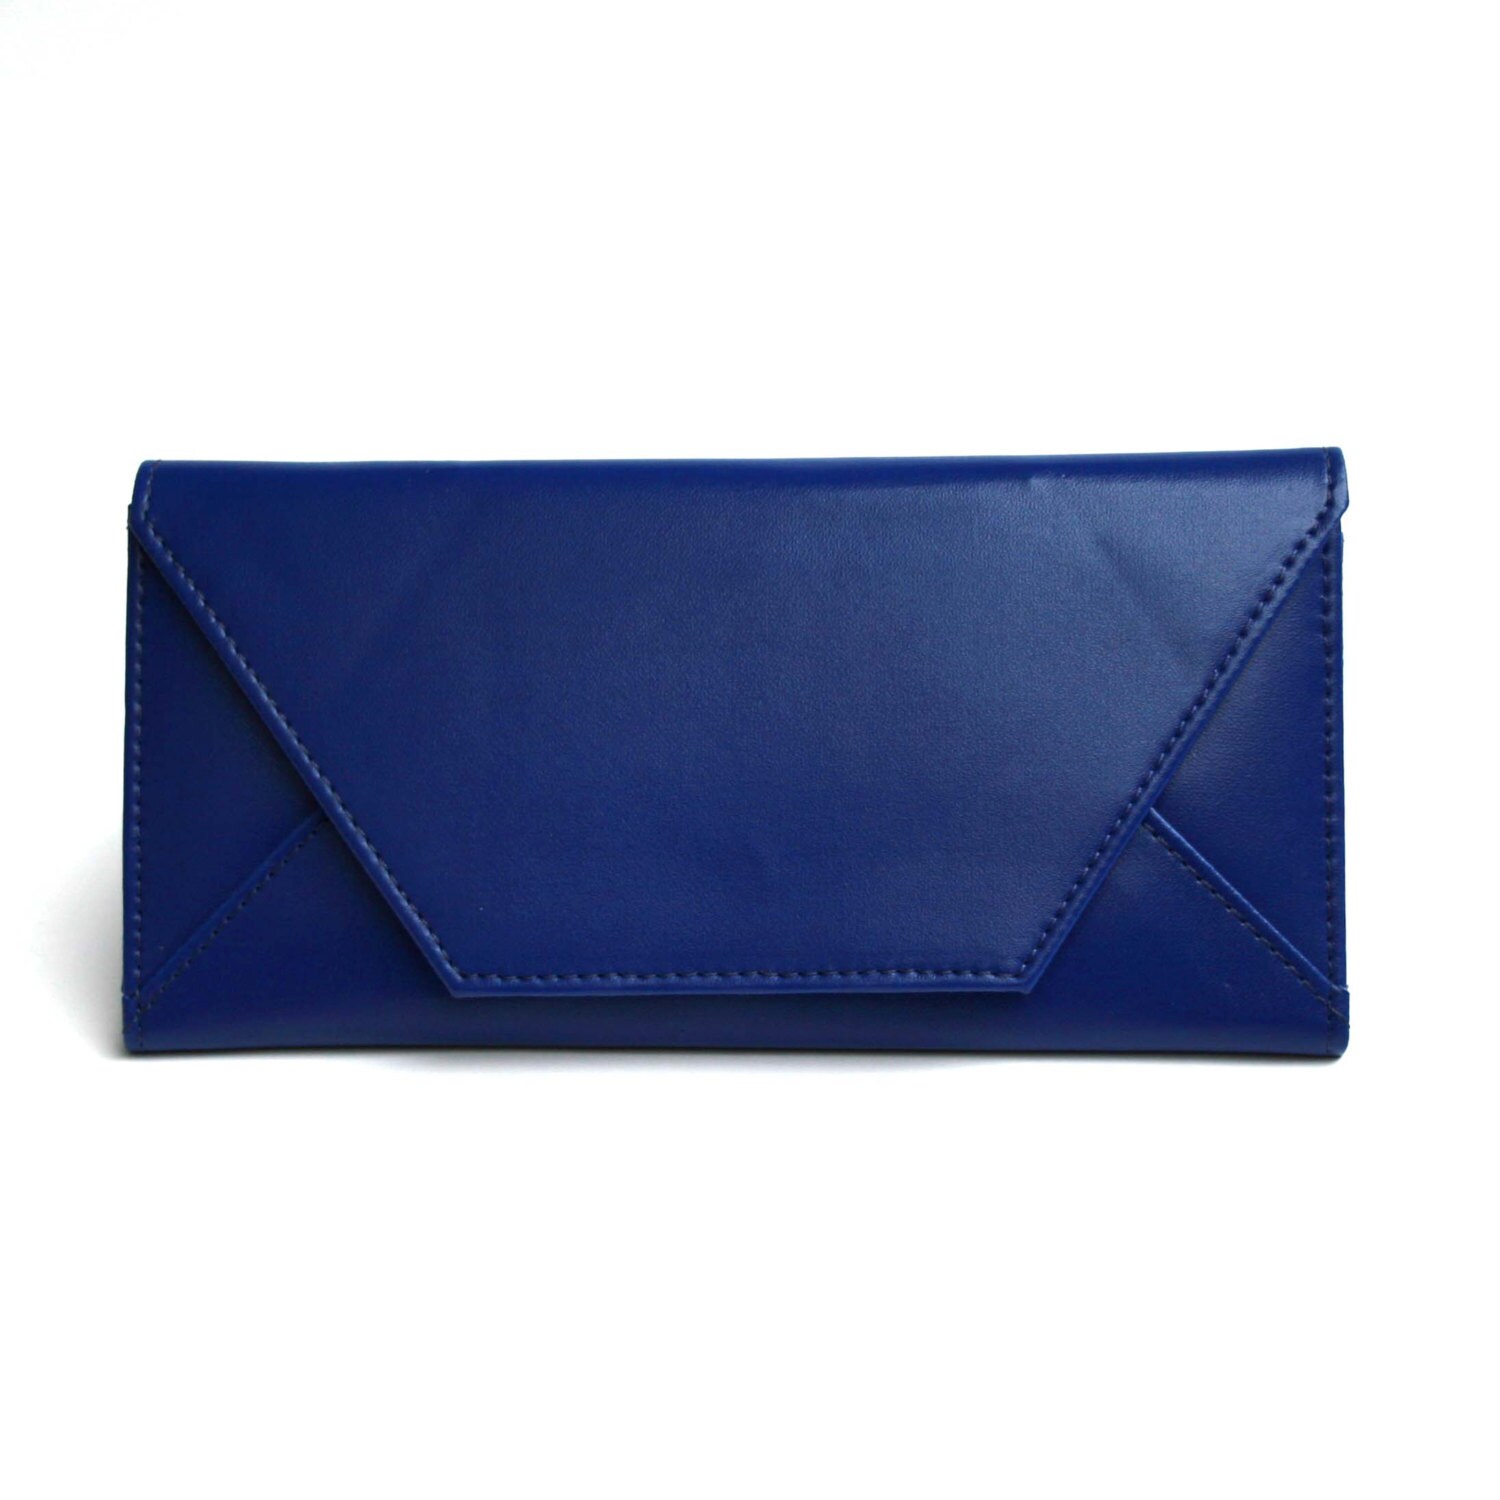 Womens Blue Leather Wallet Blue Wallet Leather Wallet